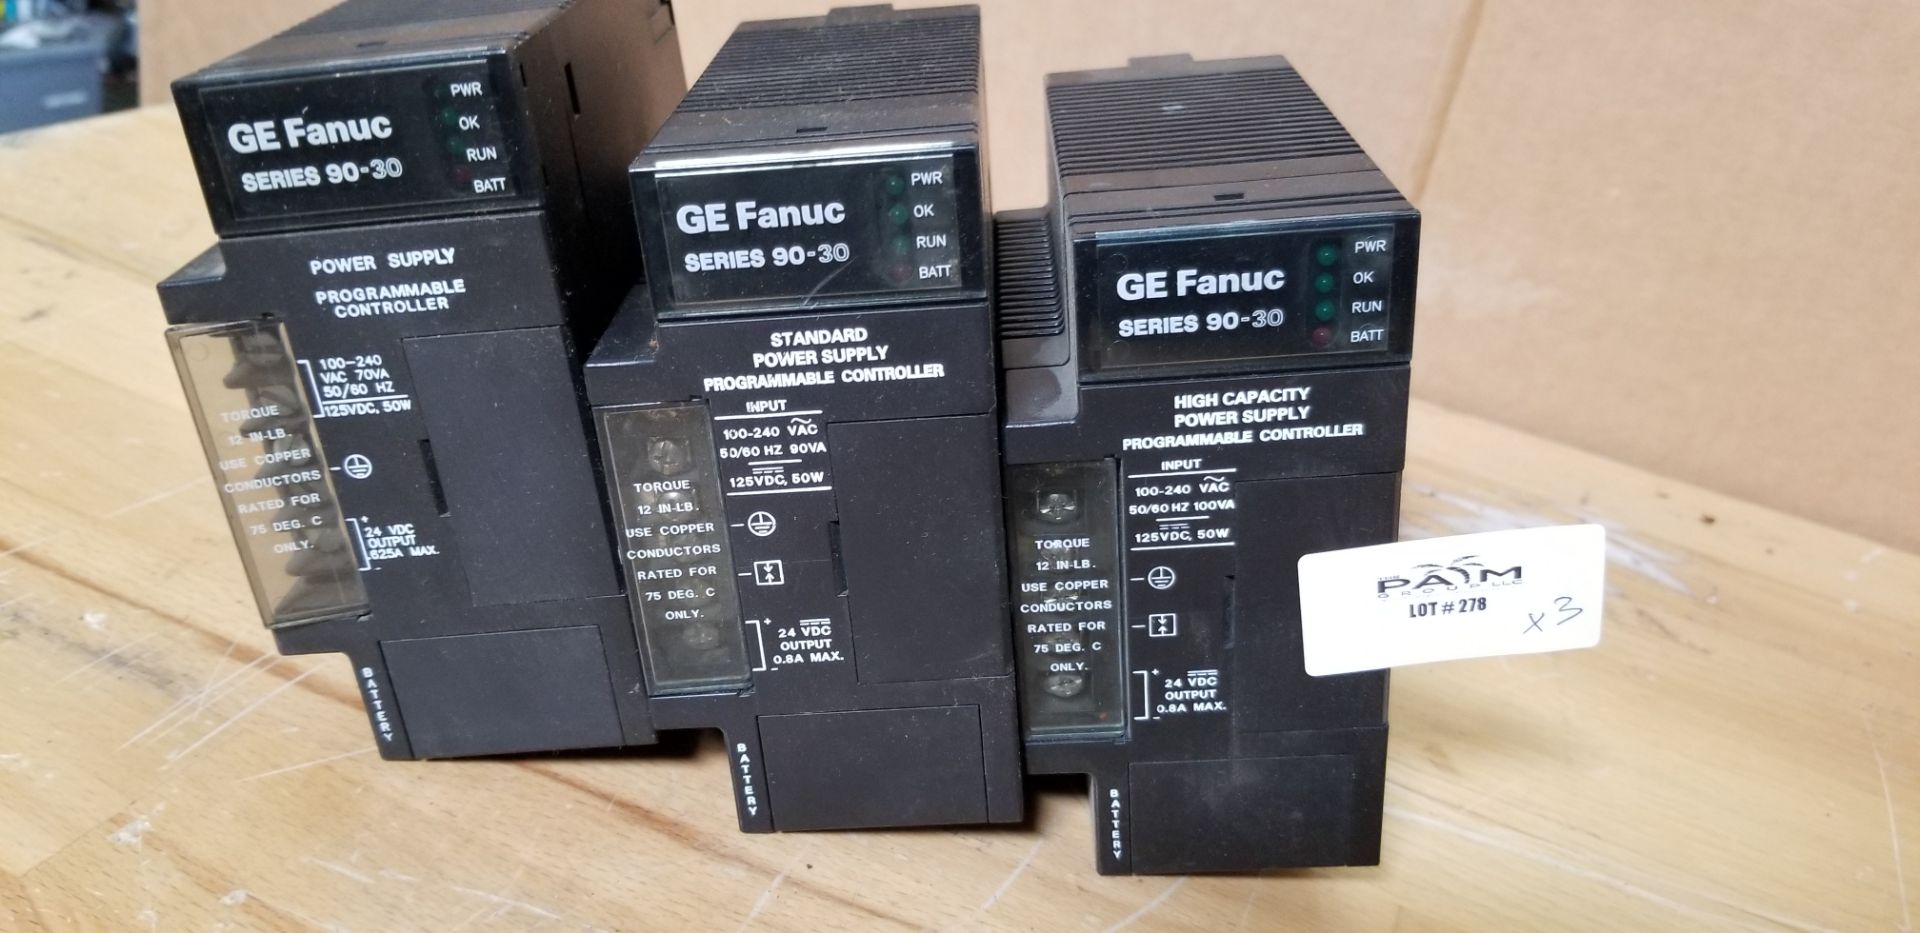 Lot of GE Fanuc Series 90-30 PLC Power Supplies